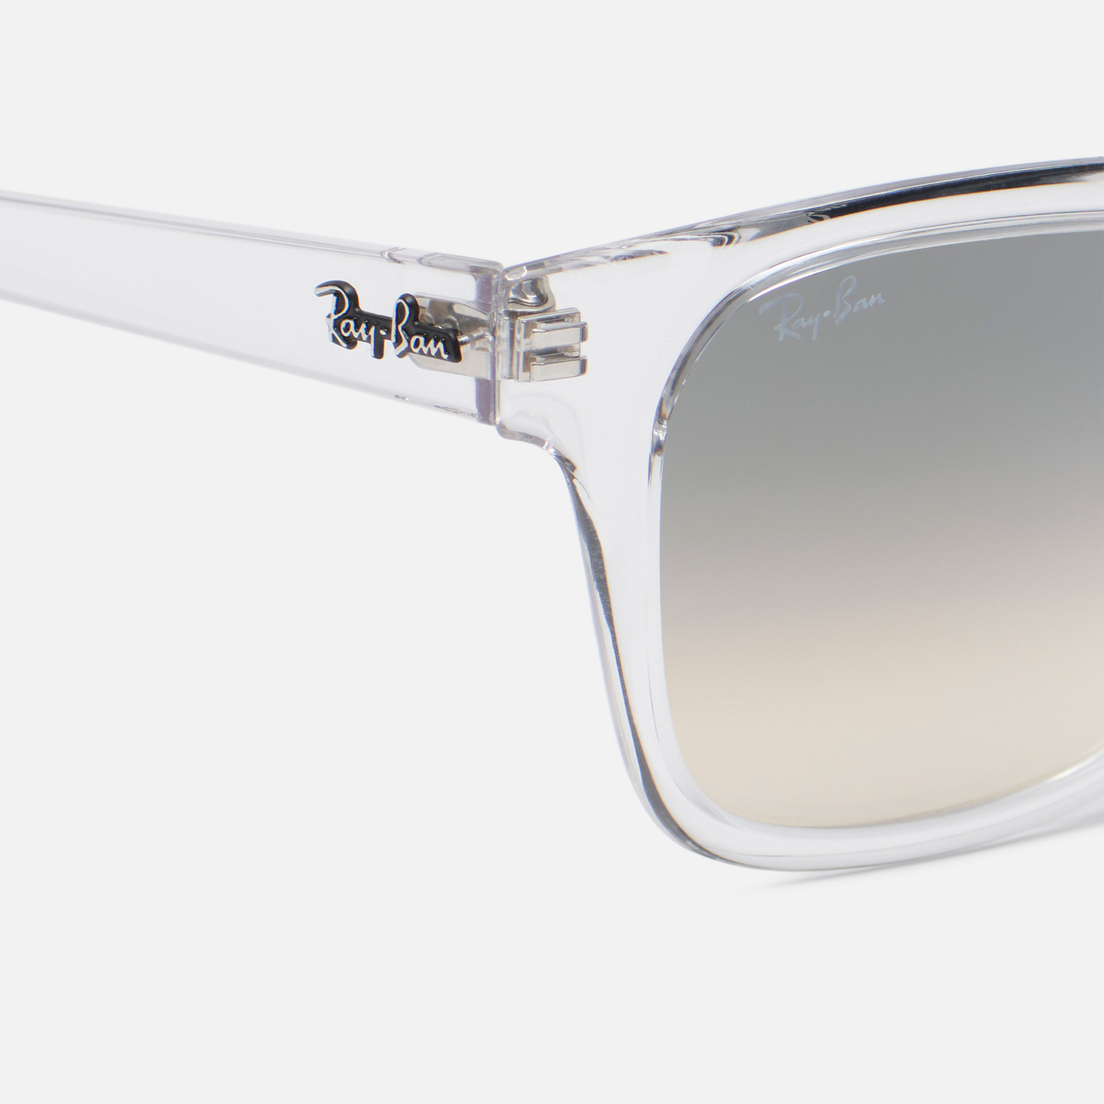 Ray-Ban Солнцезащитные очки RB4323